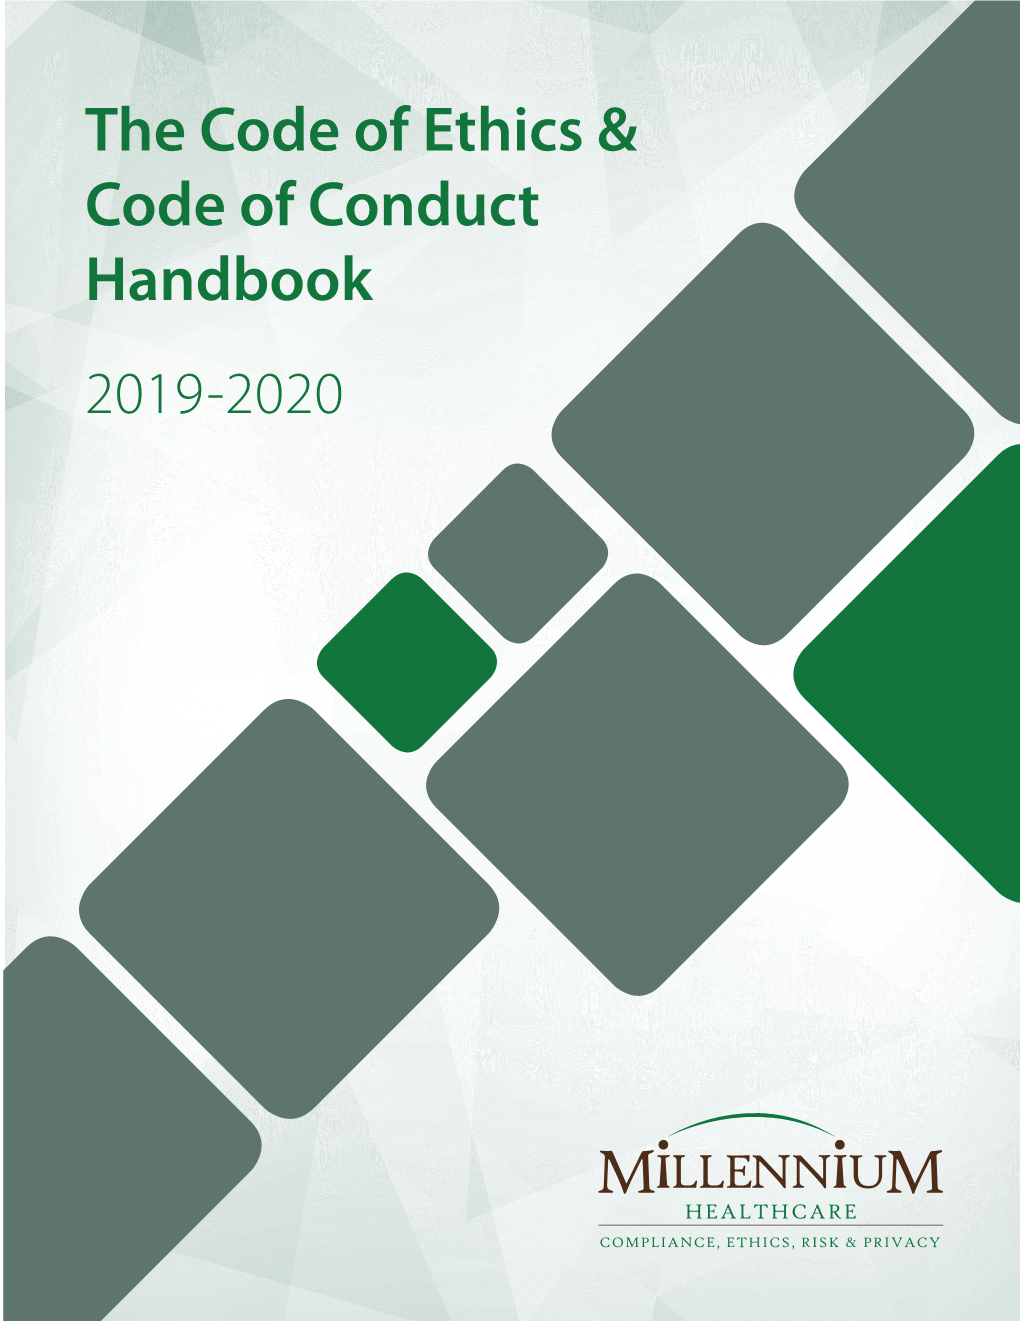 The Code of Ethics & Code of Conduct Handbook